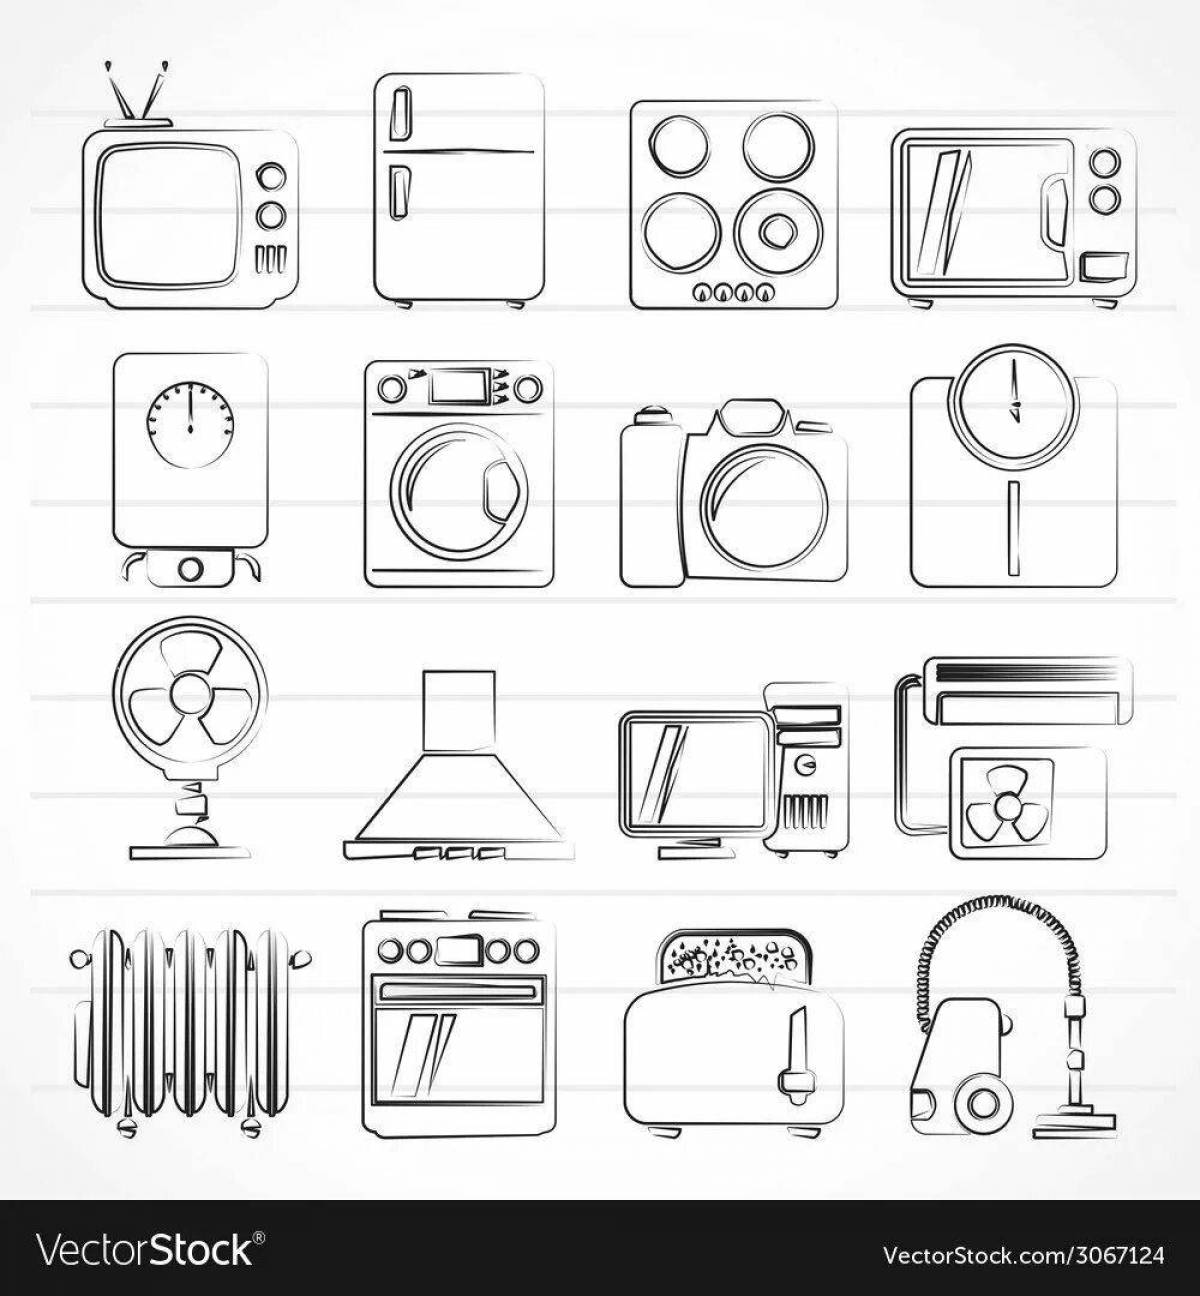 Preschool electrical appliances #2